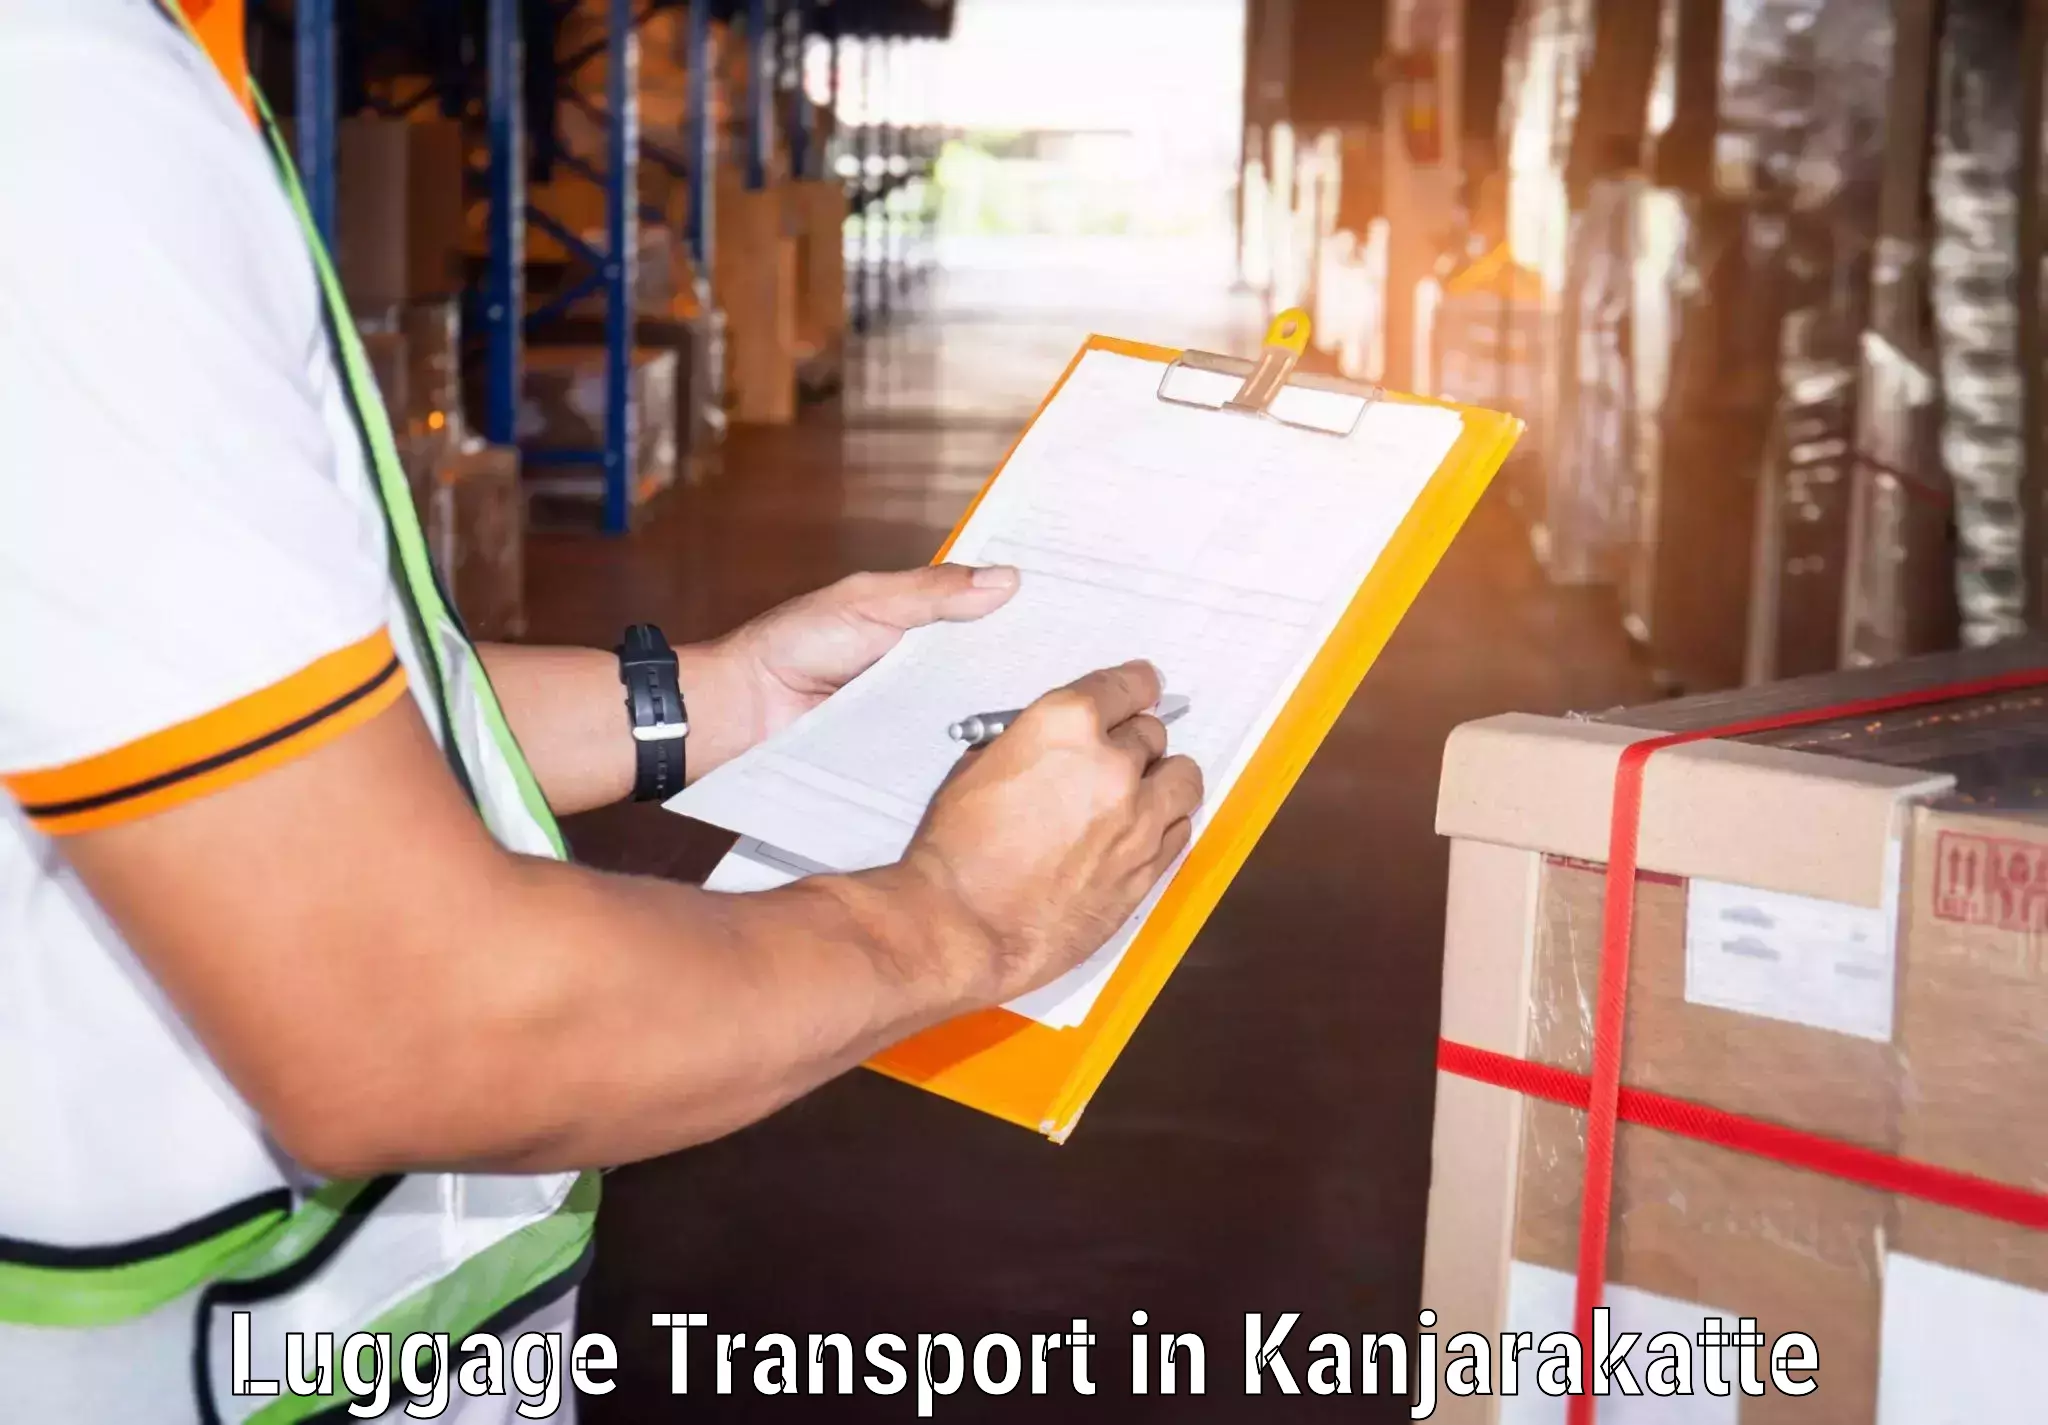 Luggage transport guidelines in Kanjarakatte